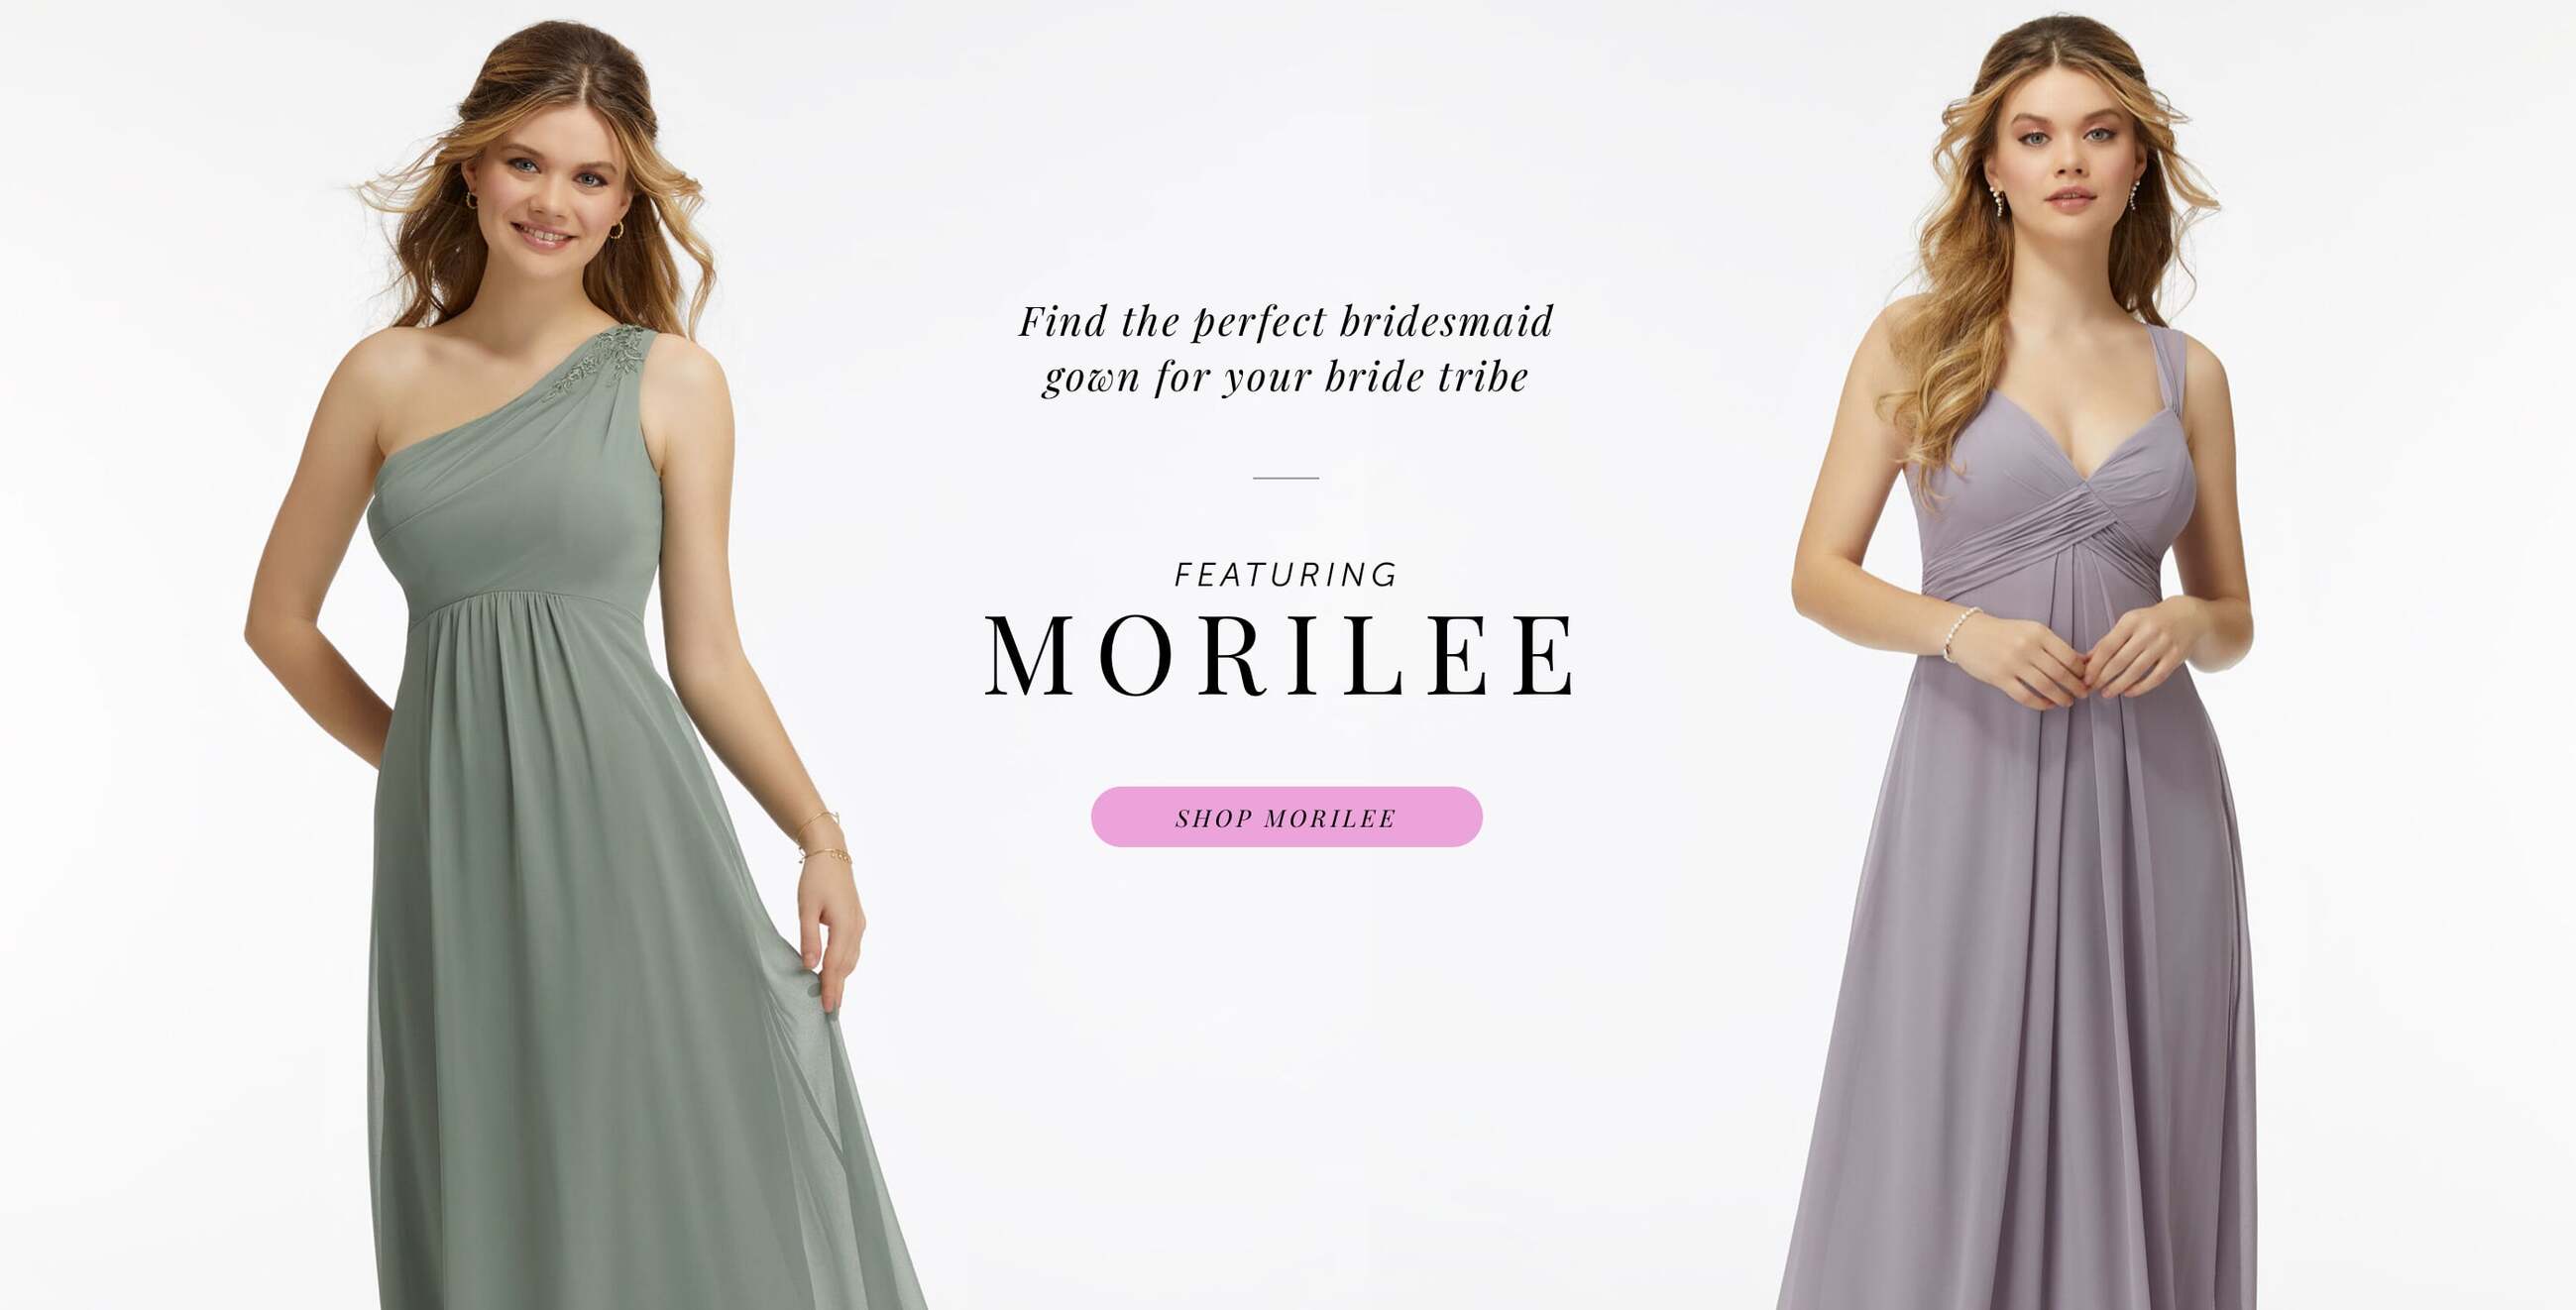 Morilee bridesmaids dresses at Trudys Brides. Desktop image.